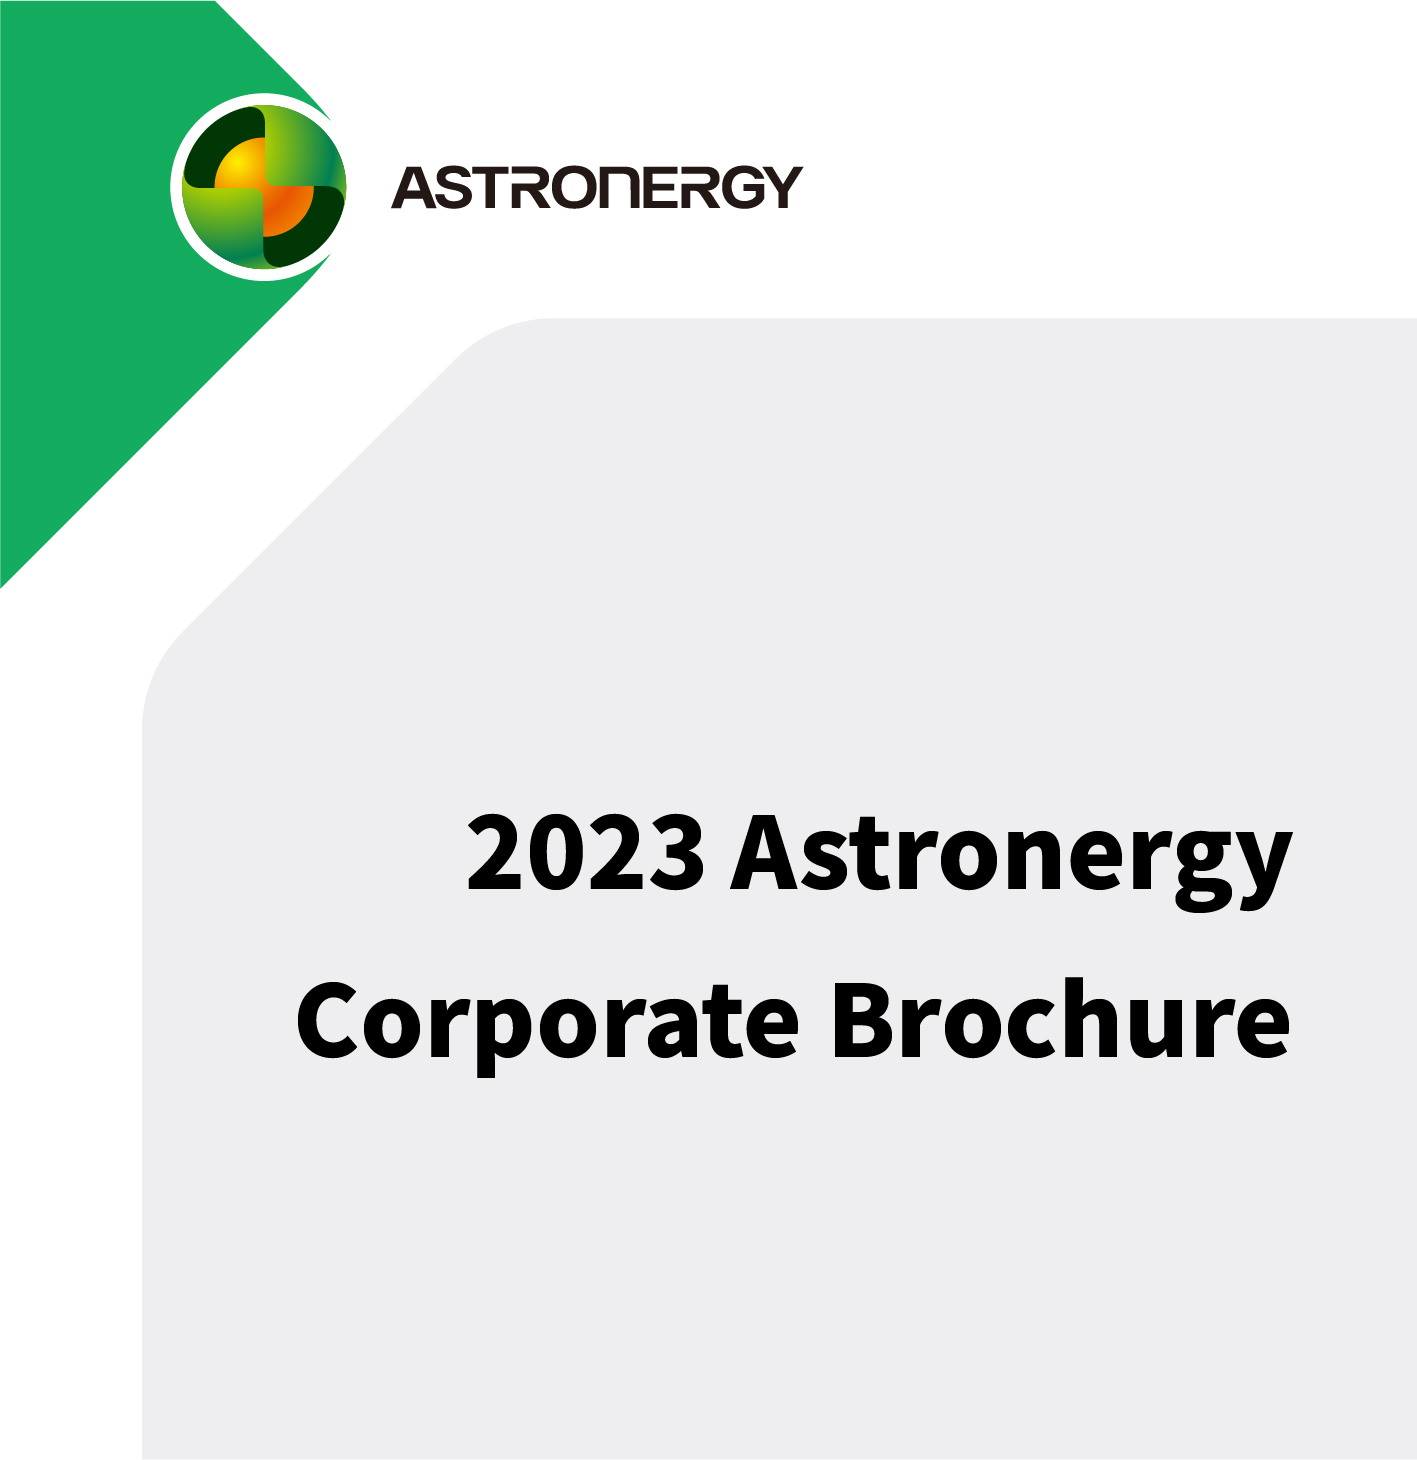 2023 Astronergy Corporate Brochure